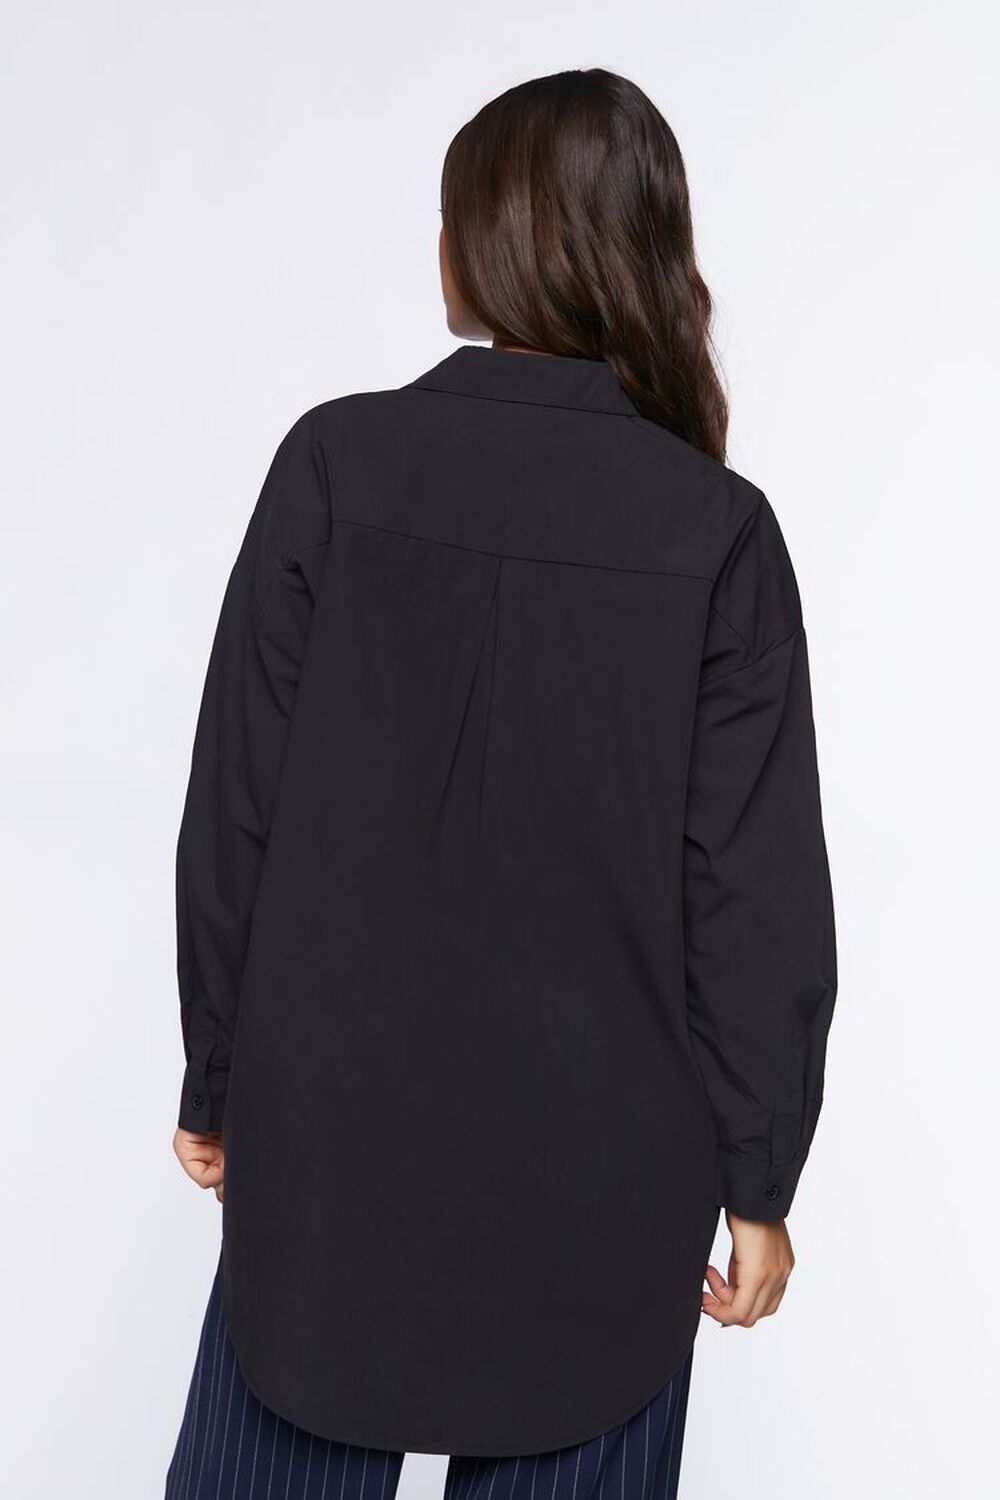 BLACK Oversized Longline Poplin Shirt, image 3